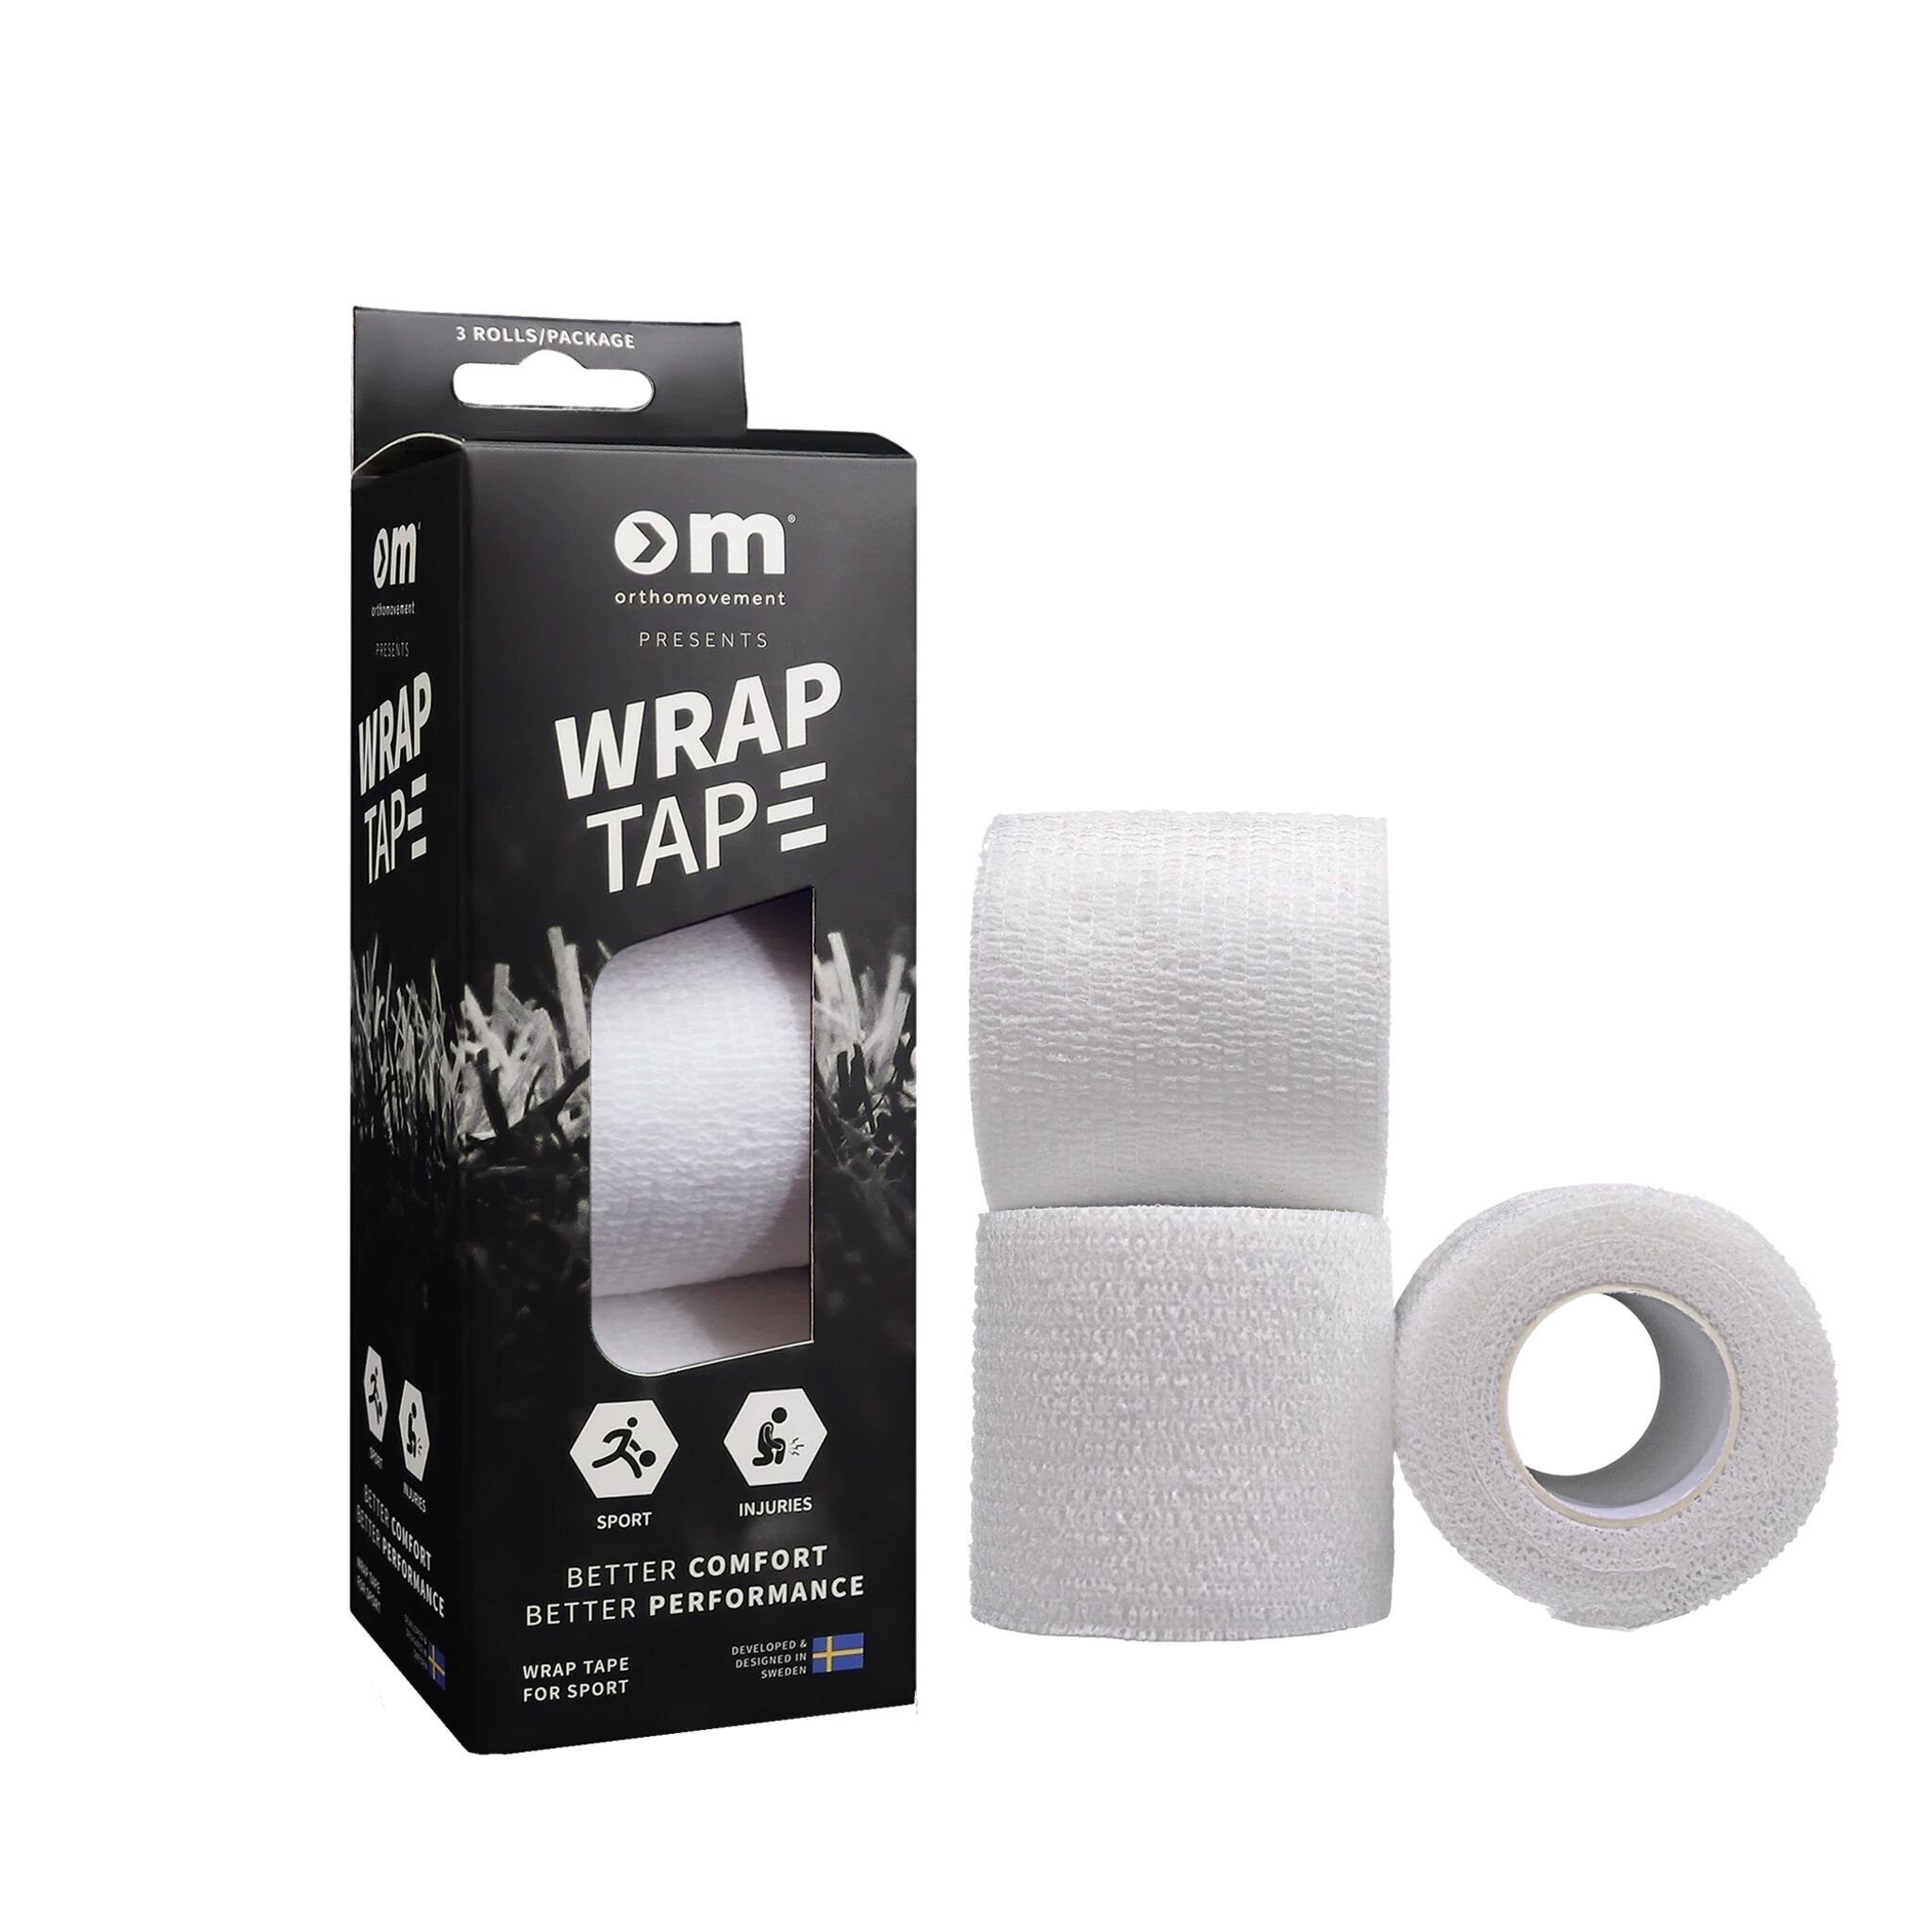 Ortho Movement Wrap Tape 3 Pack, fotballteip One Size White